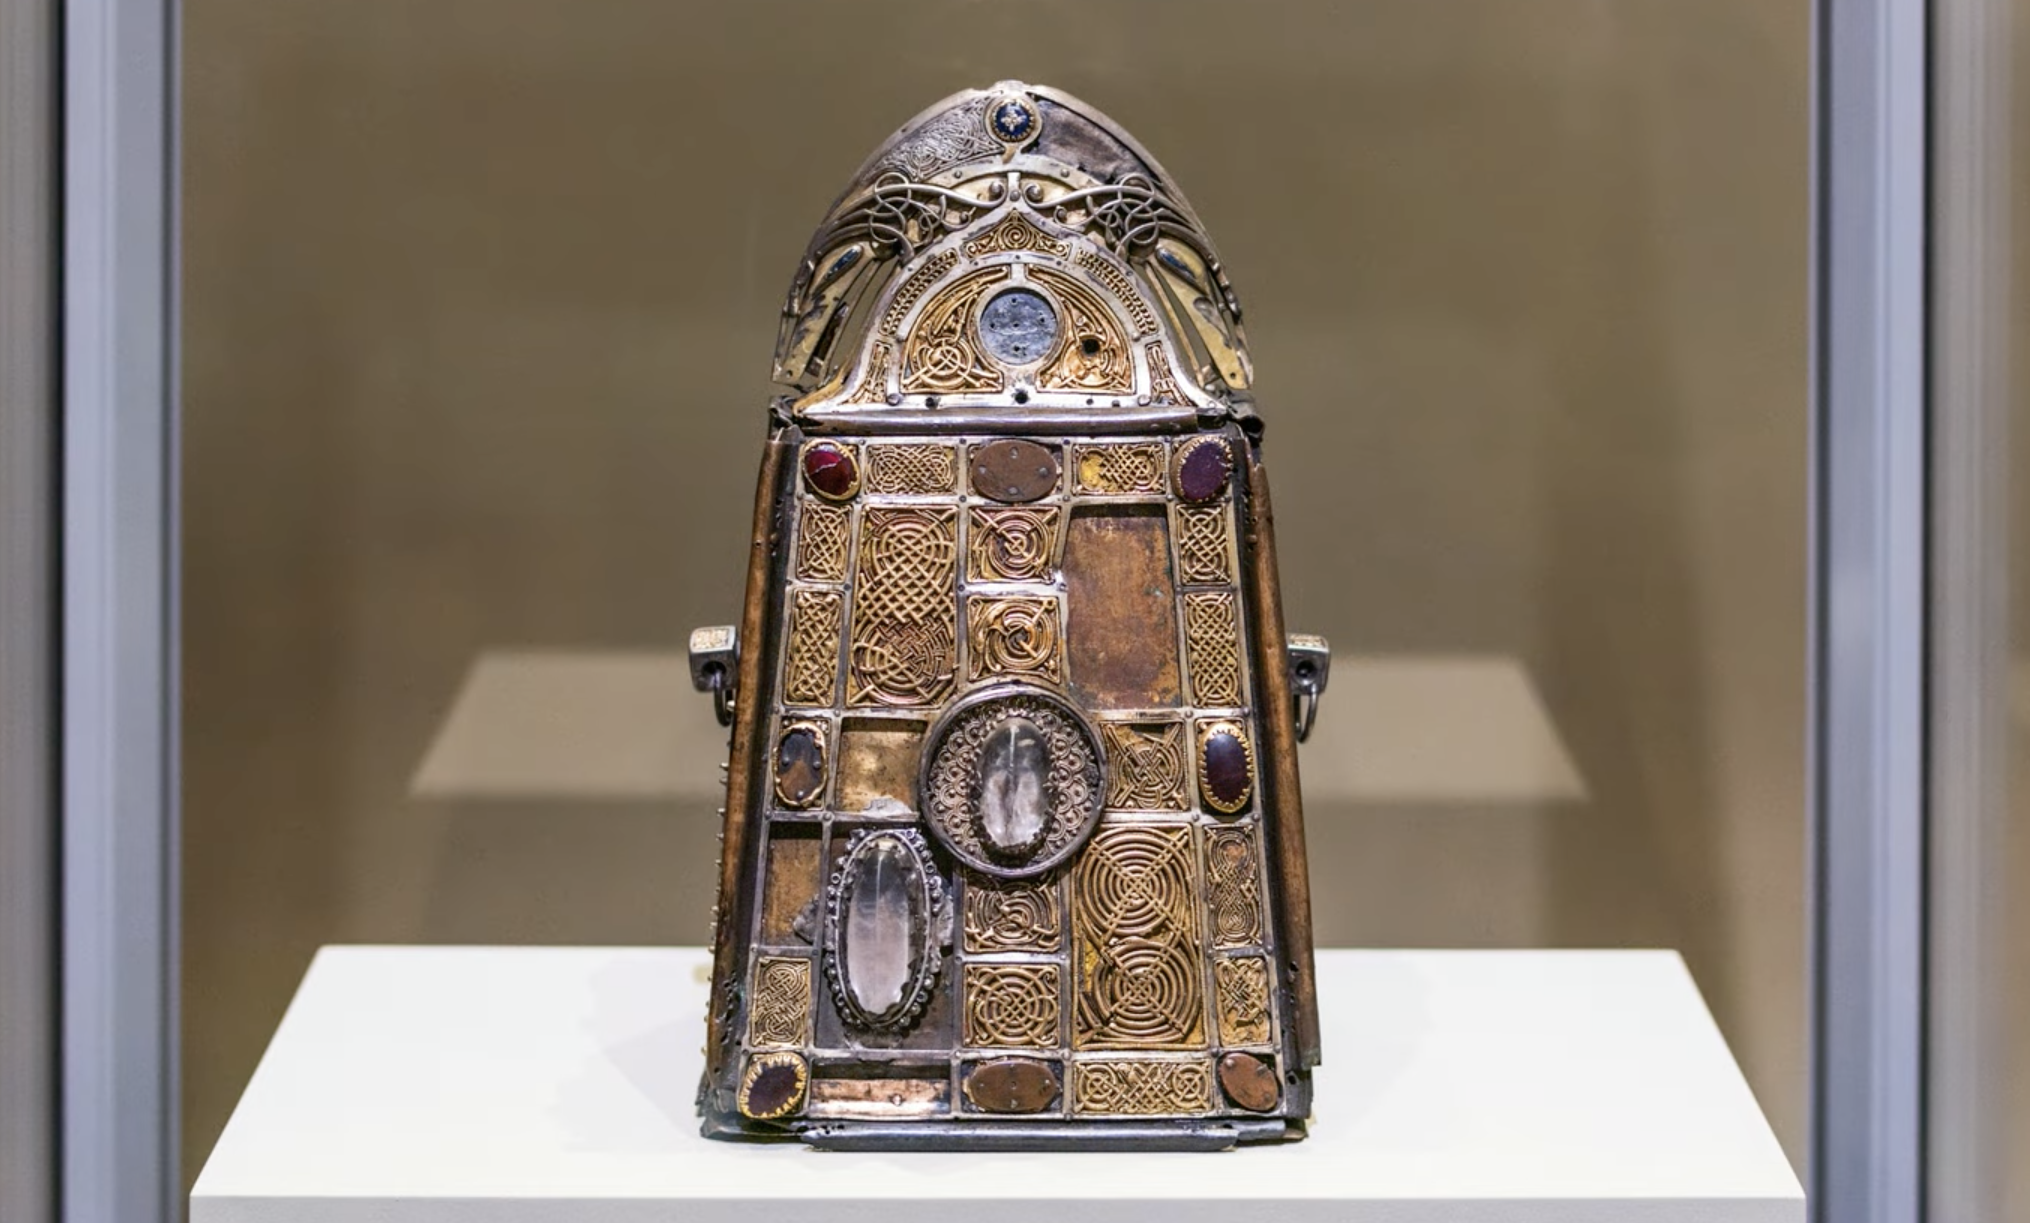 Saint Patrick's Bell and Shrine; bell: 8th–9th century C.E., iron; shrine: c. 1100 C.E., copper-alloy box, silver gilt, gold, silver, gilt-copper, rock crystal, colored stones, 26.7 x 15.5 cm (National Museum of Ireland, Dublin)